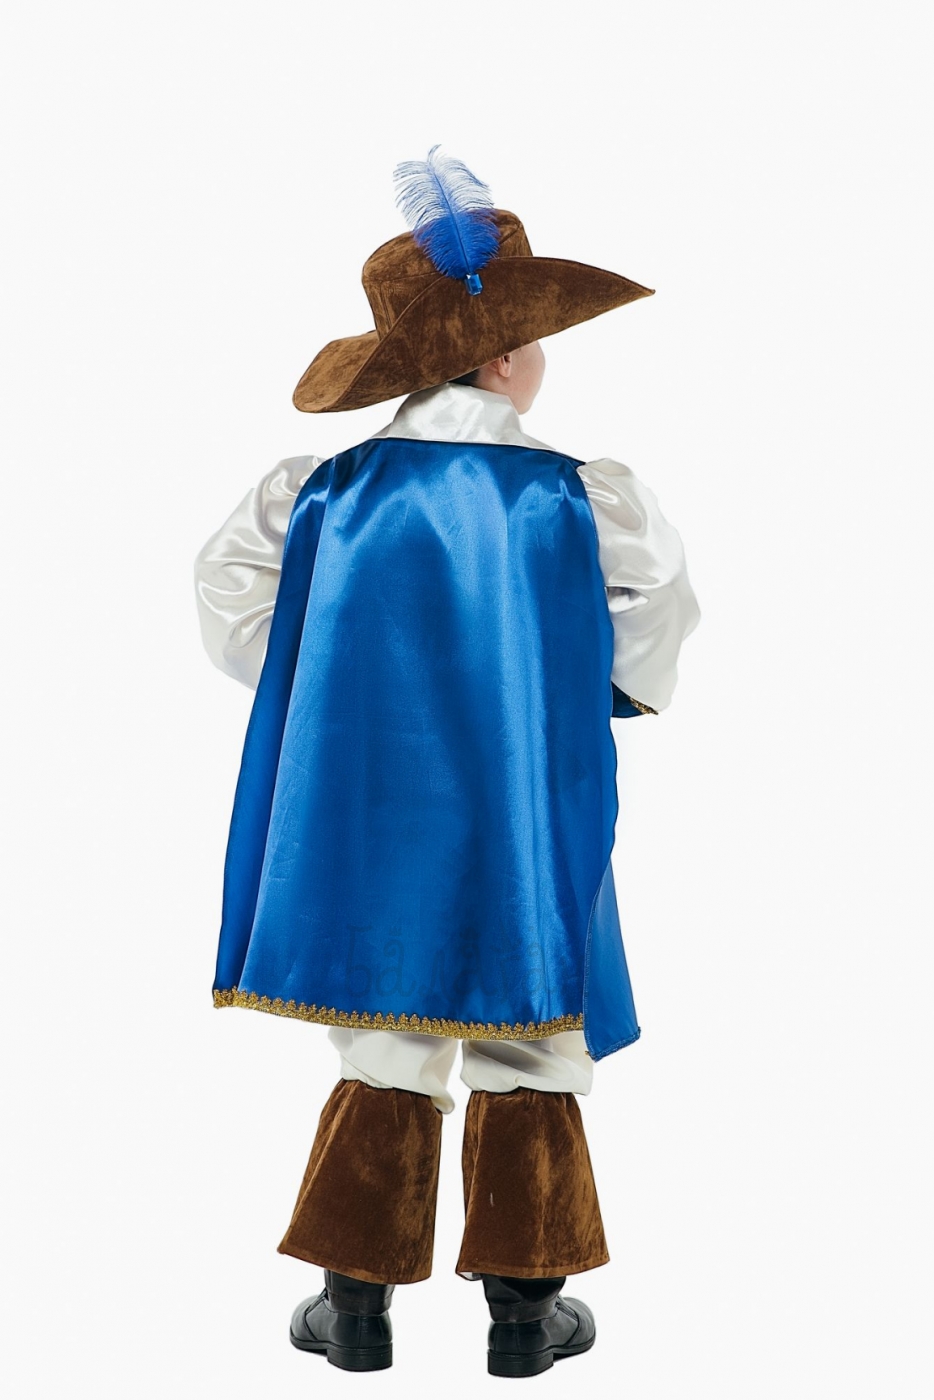 Musketeer costume